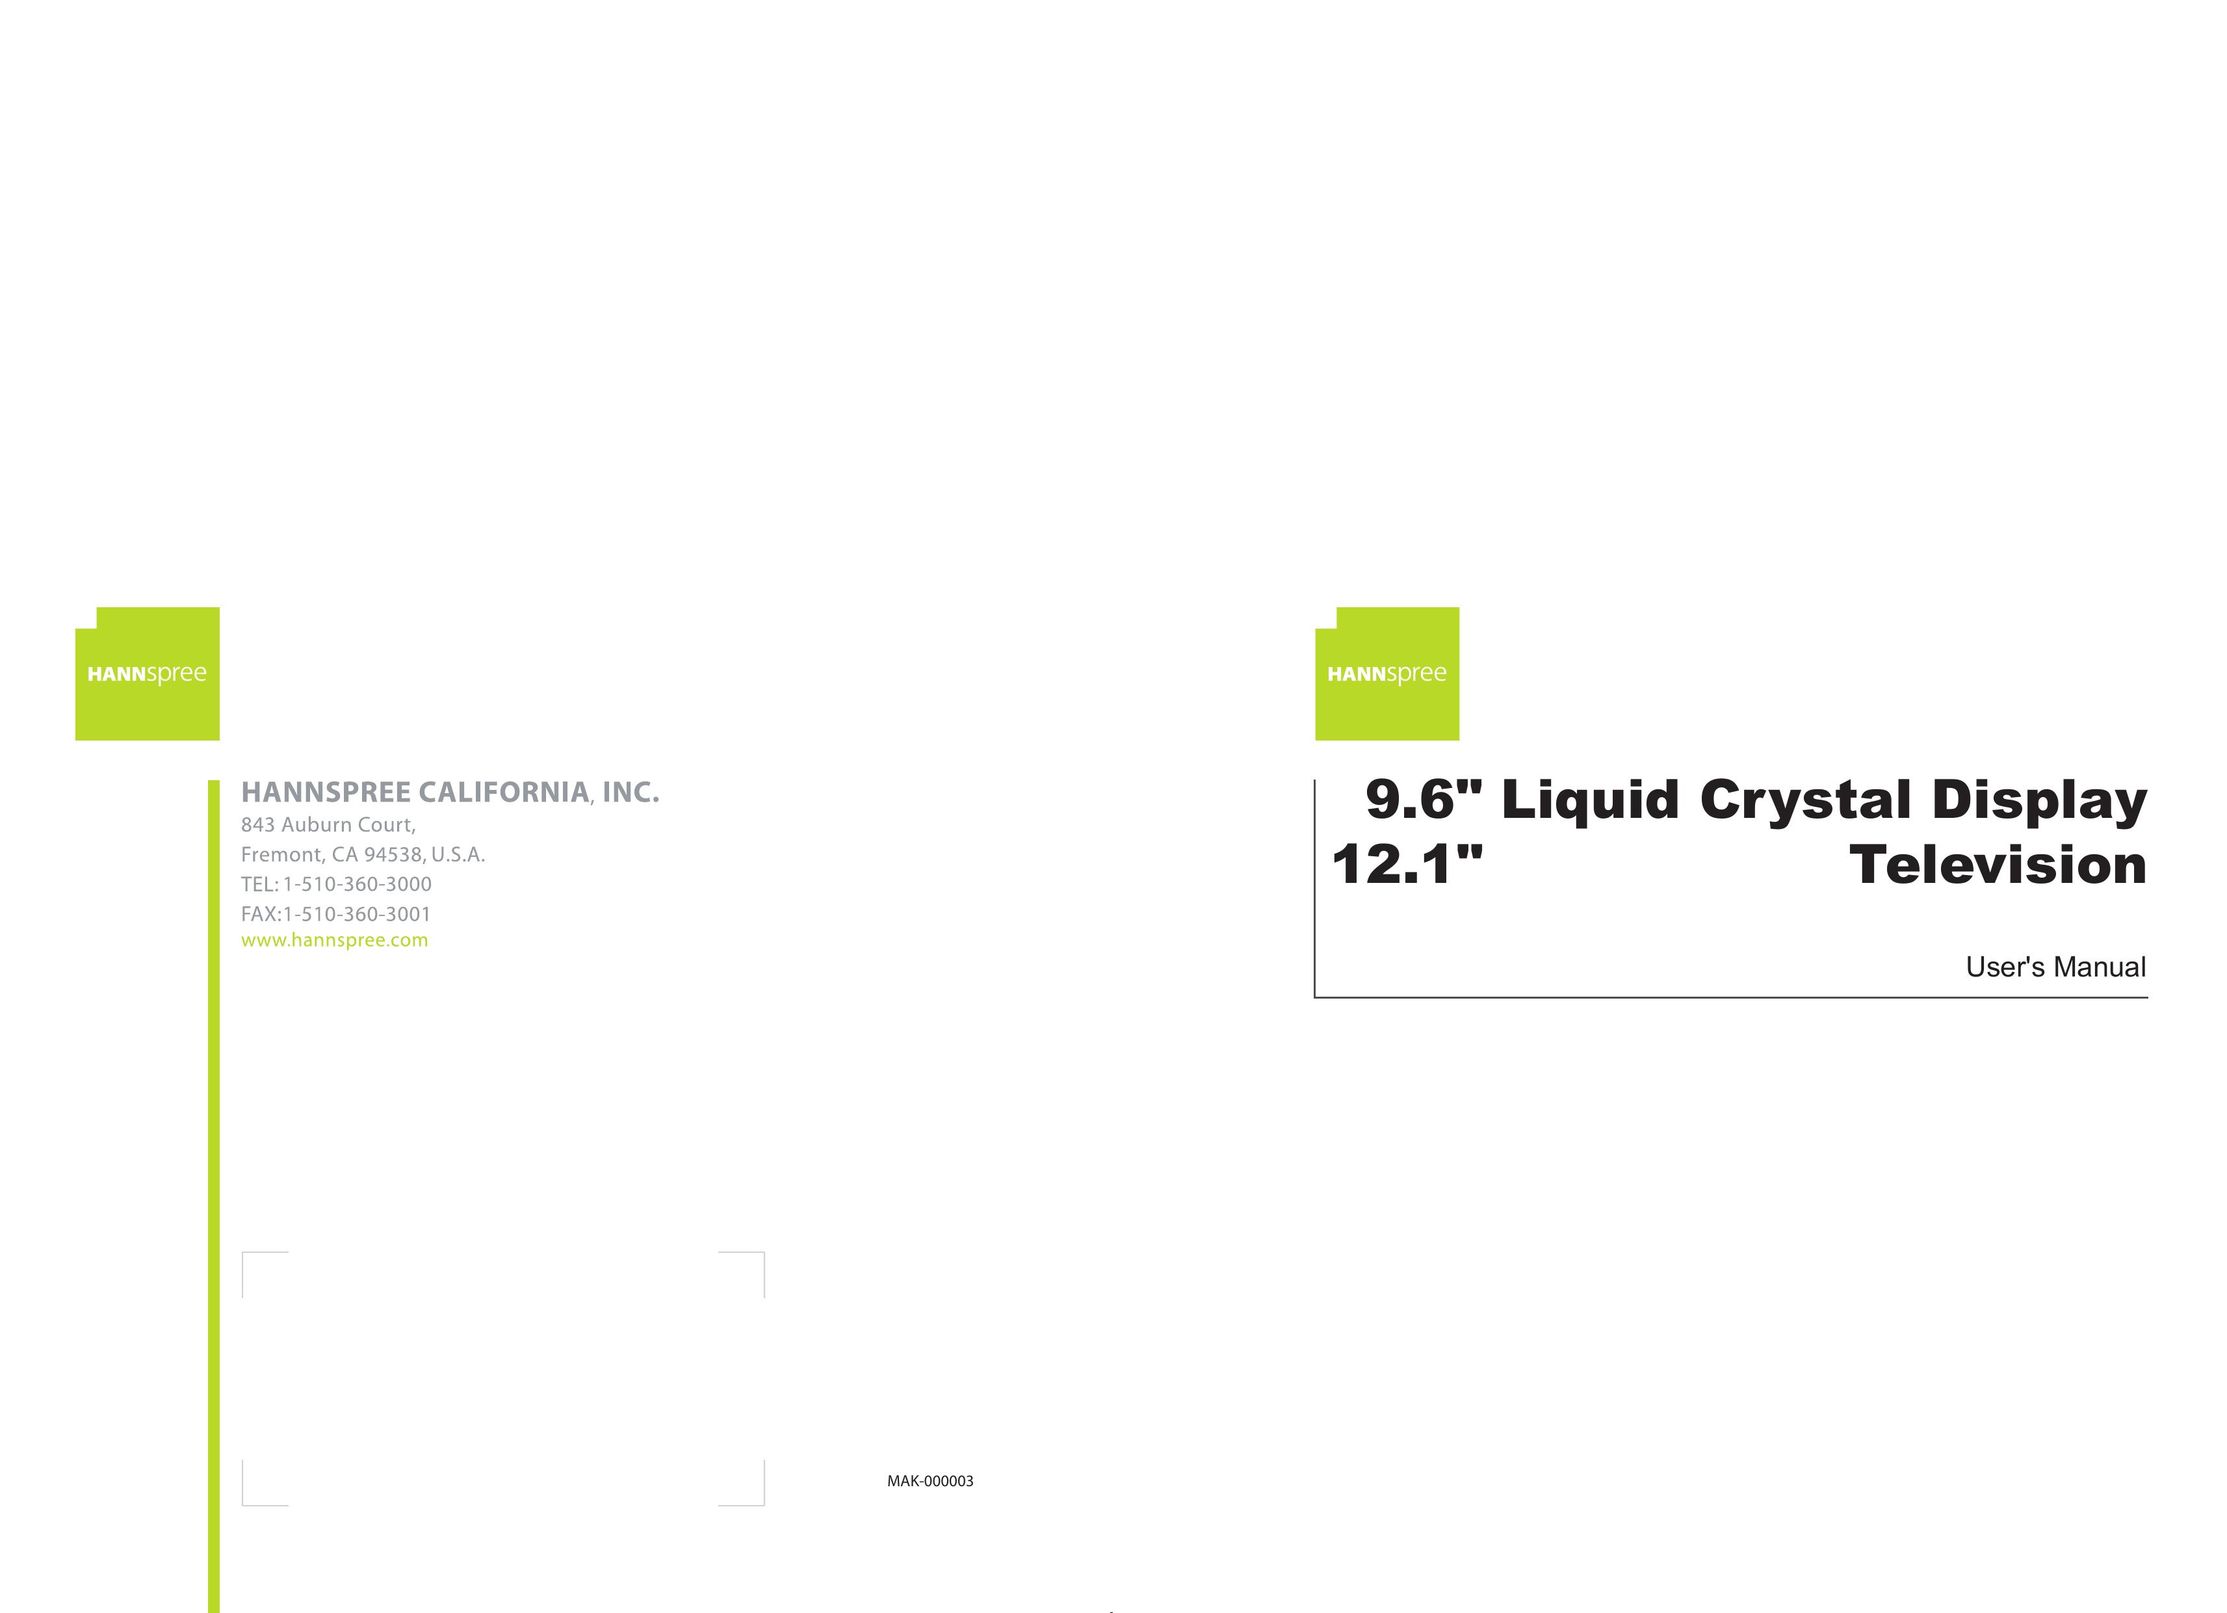 HANNspree 9.6" Liquid Crystal Display Flat Panel Television User Manual